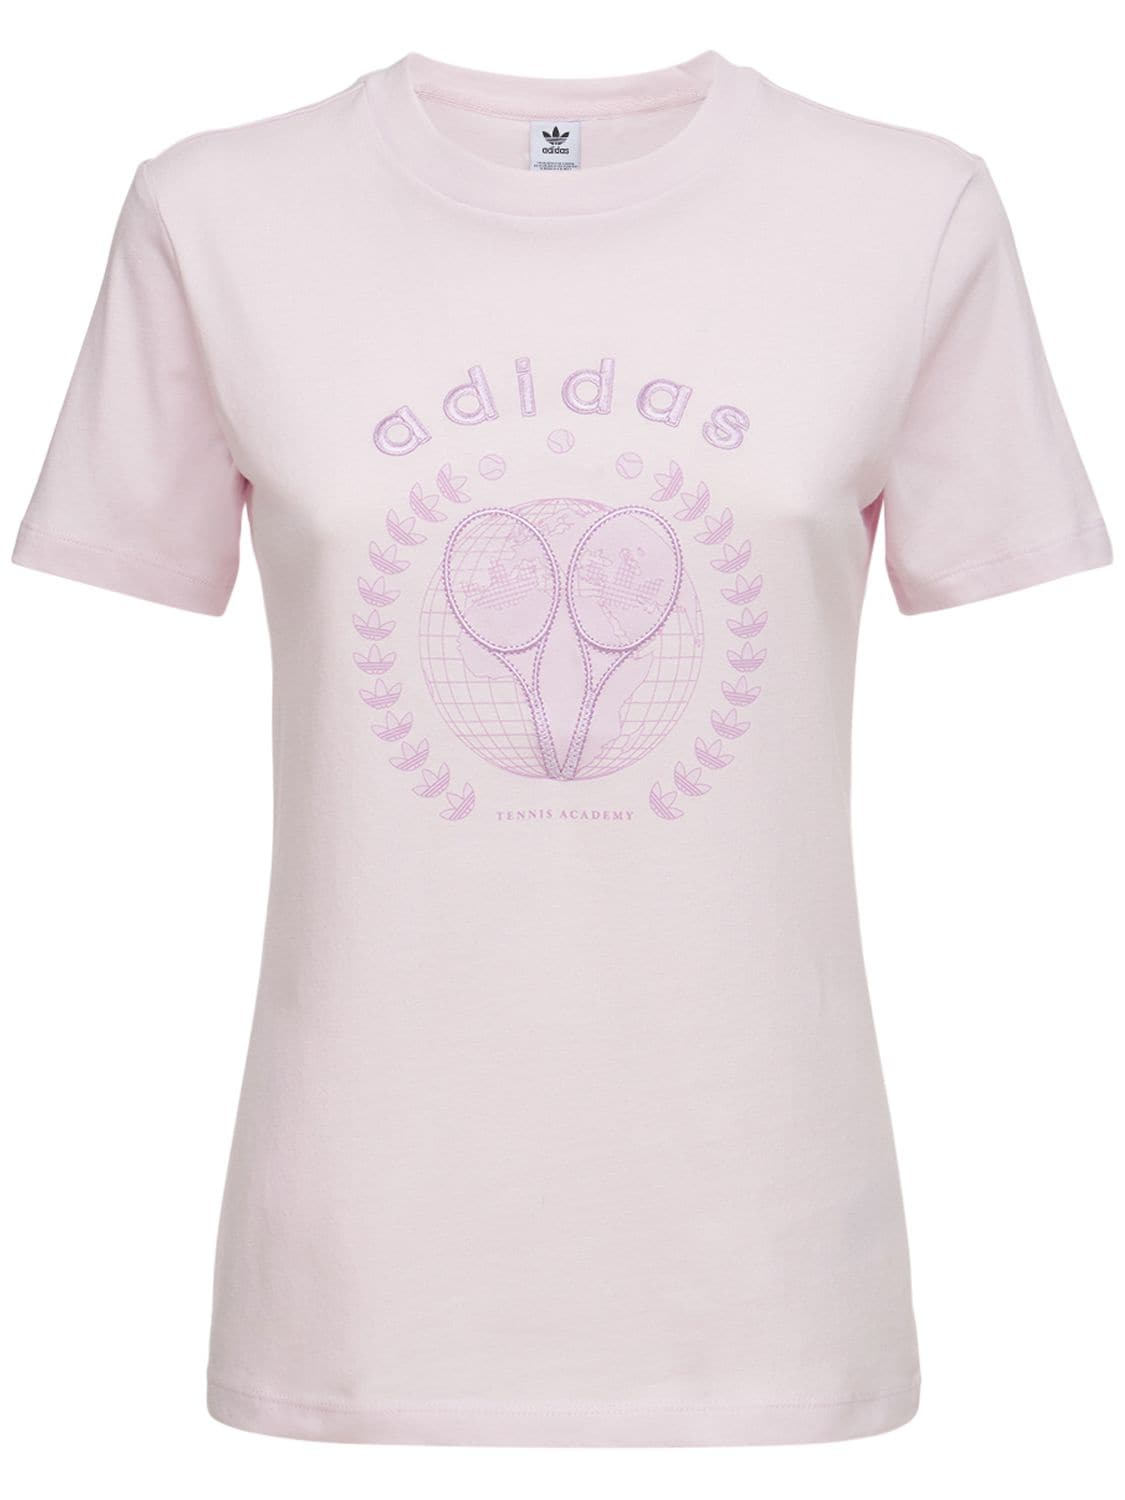 T-shirt En Coton Brodé Et Imprimé - ADIDAS ORIGINALS - Modalova